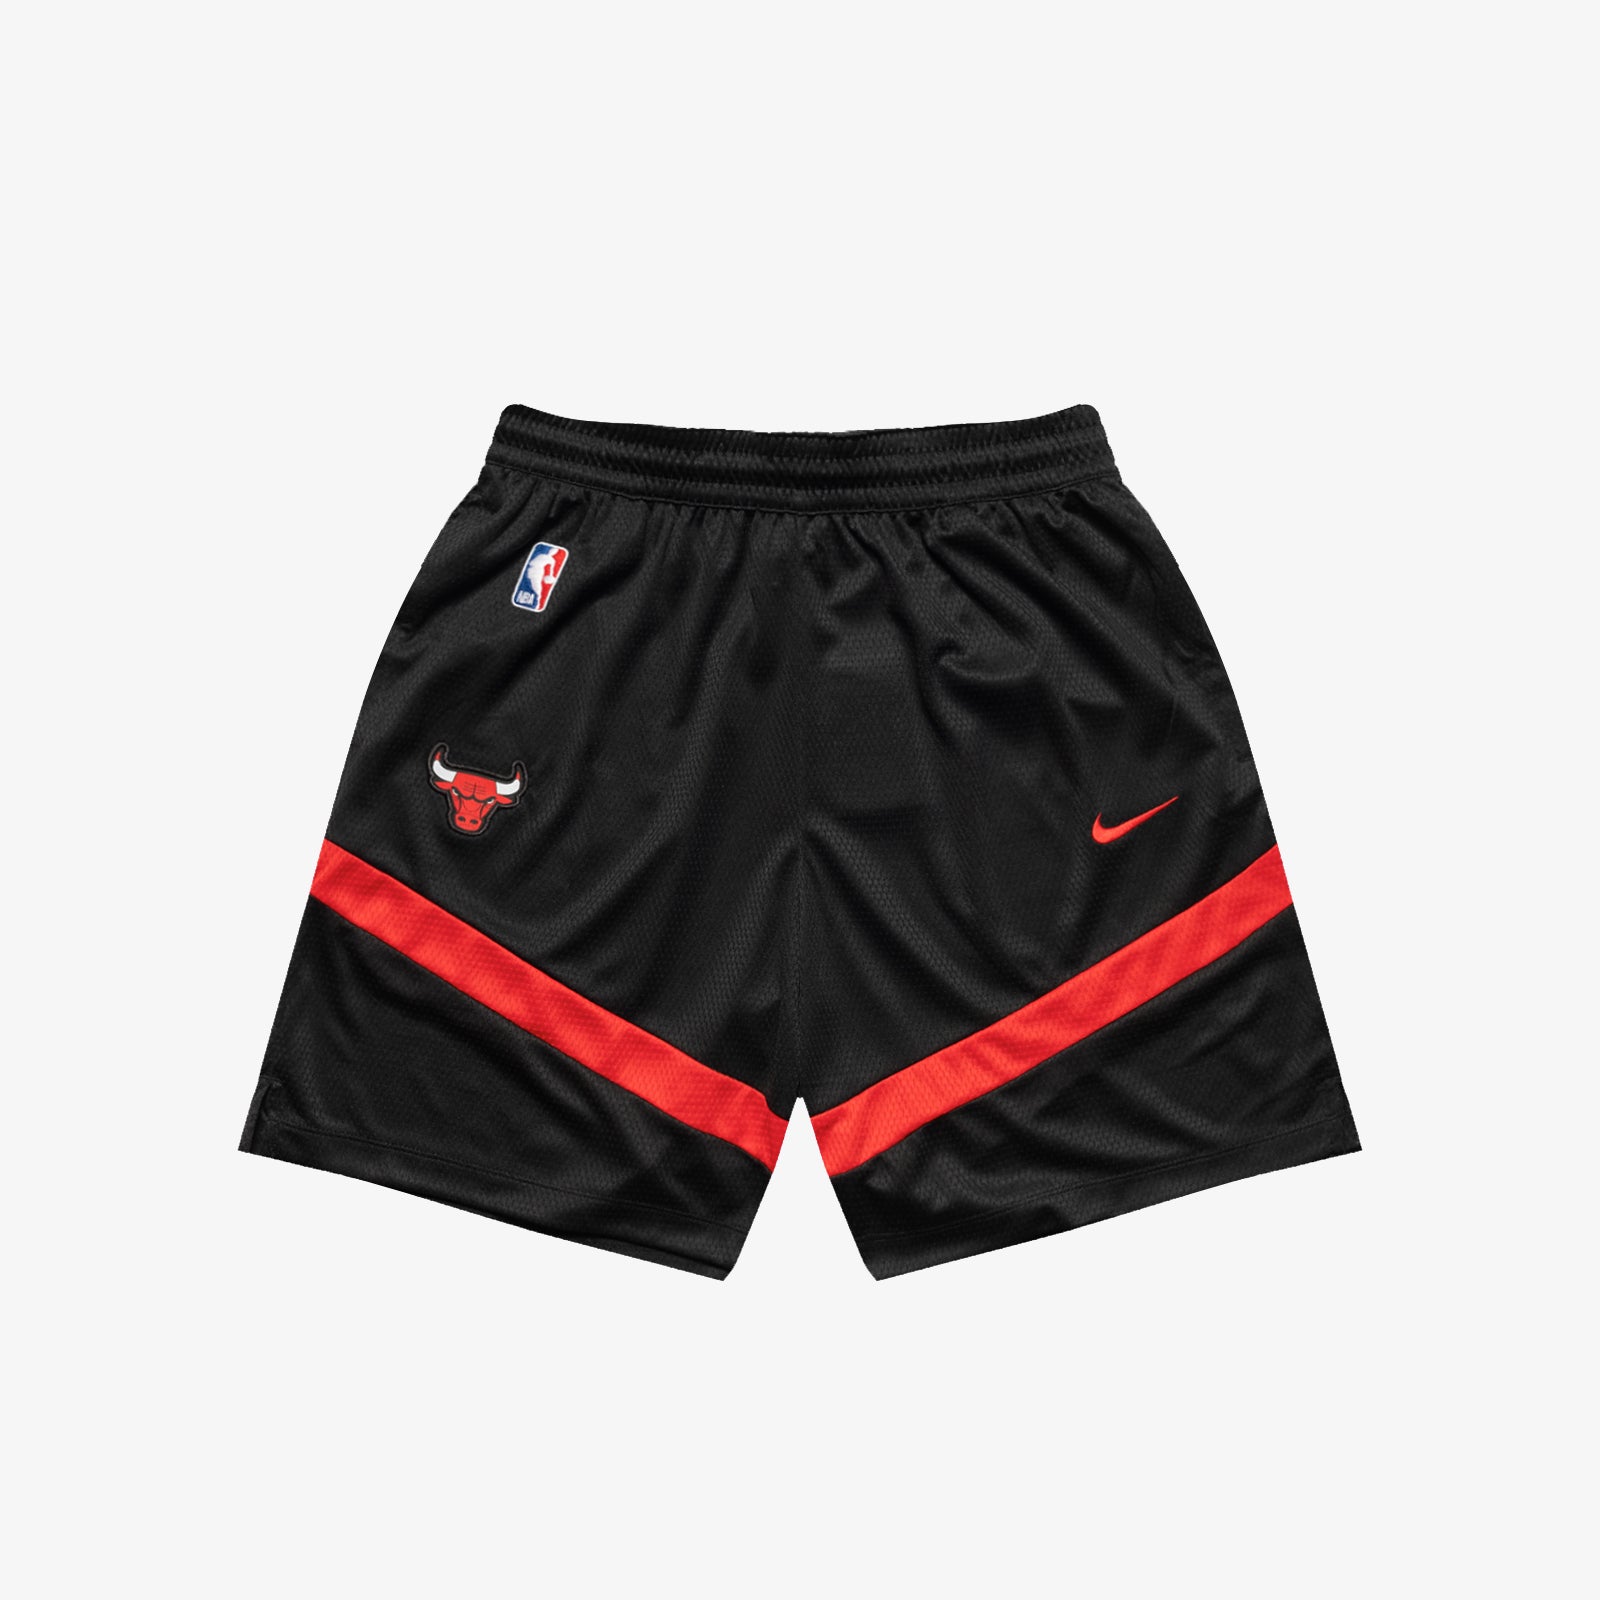 Official Chicago Bulls Kids Shorts, Basketball Shorts, Gym Shorts,  Compression Shorts